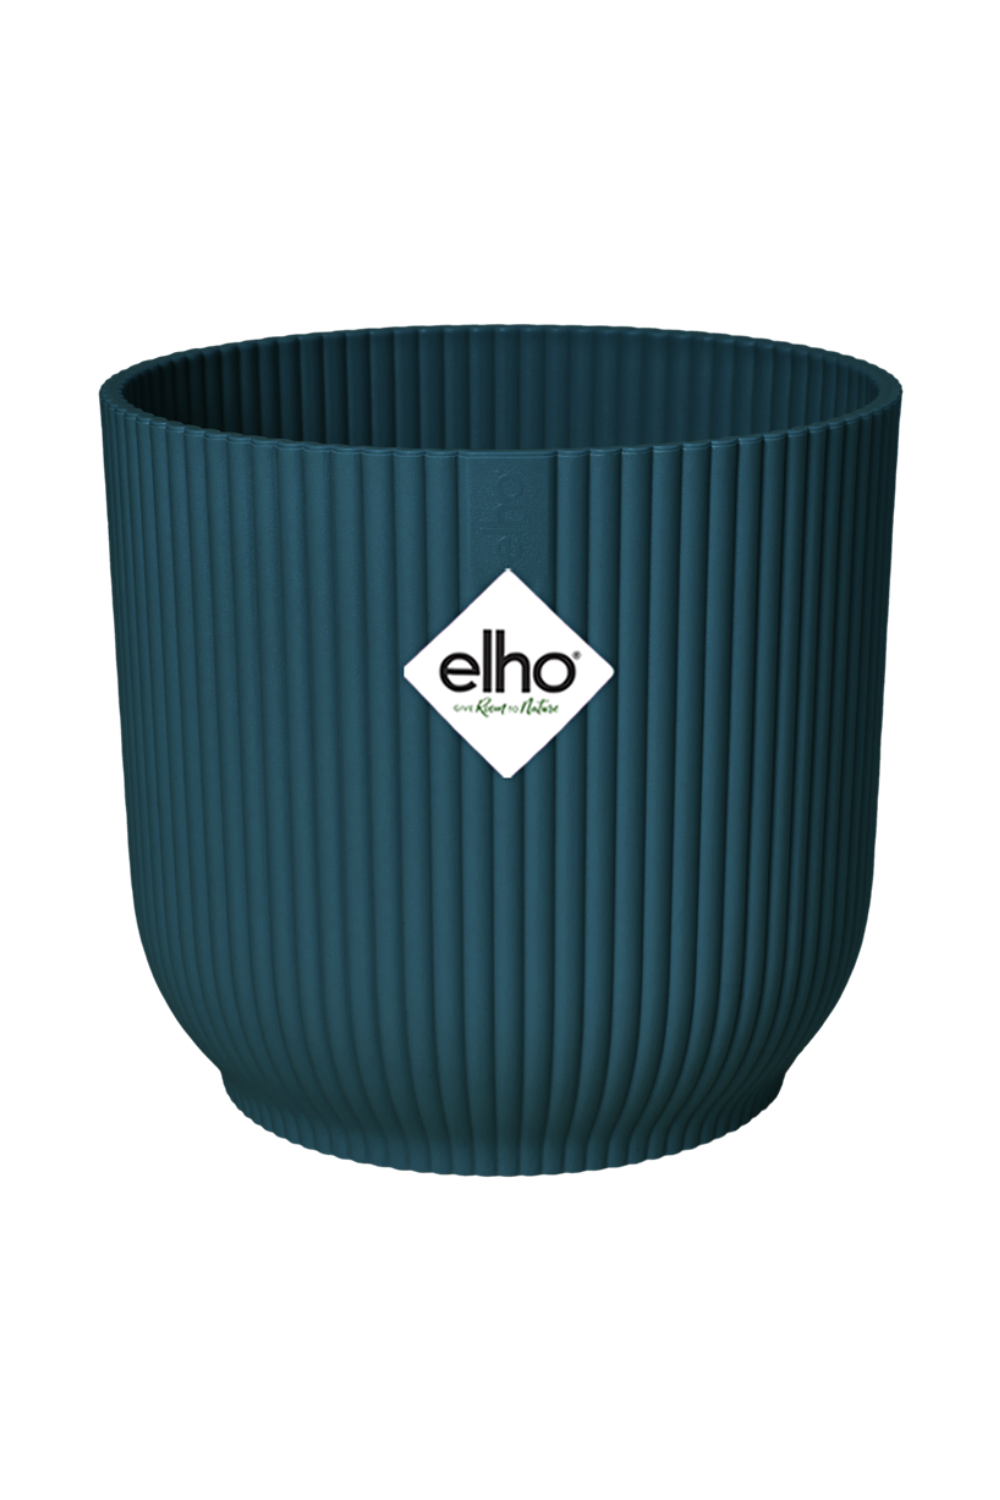 Blumentopf Elho Vibes Fold rund Deep Blue 16cm